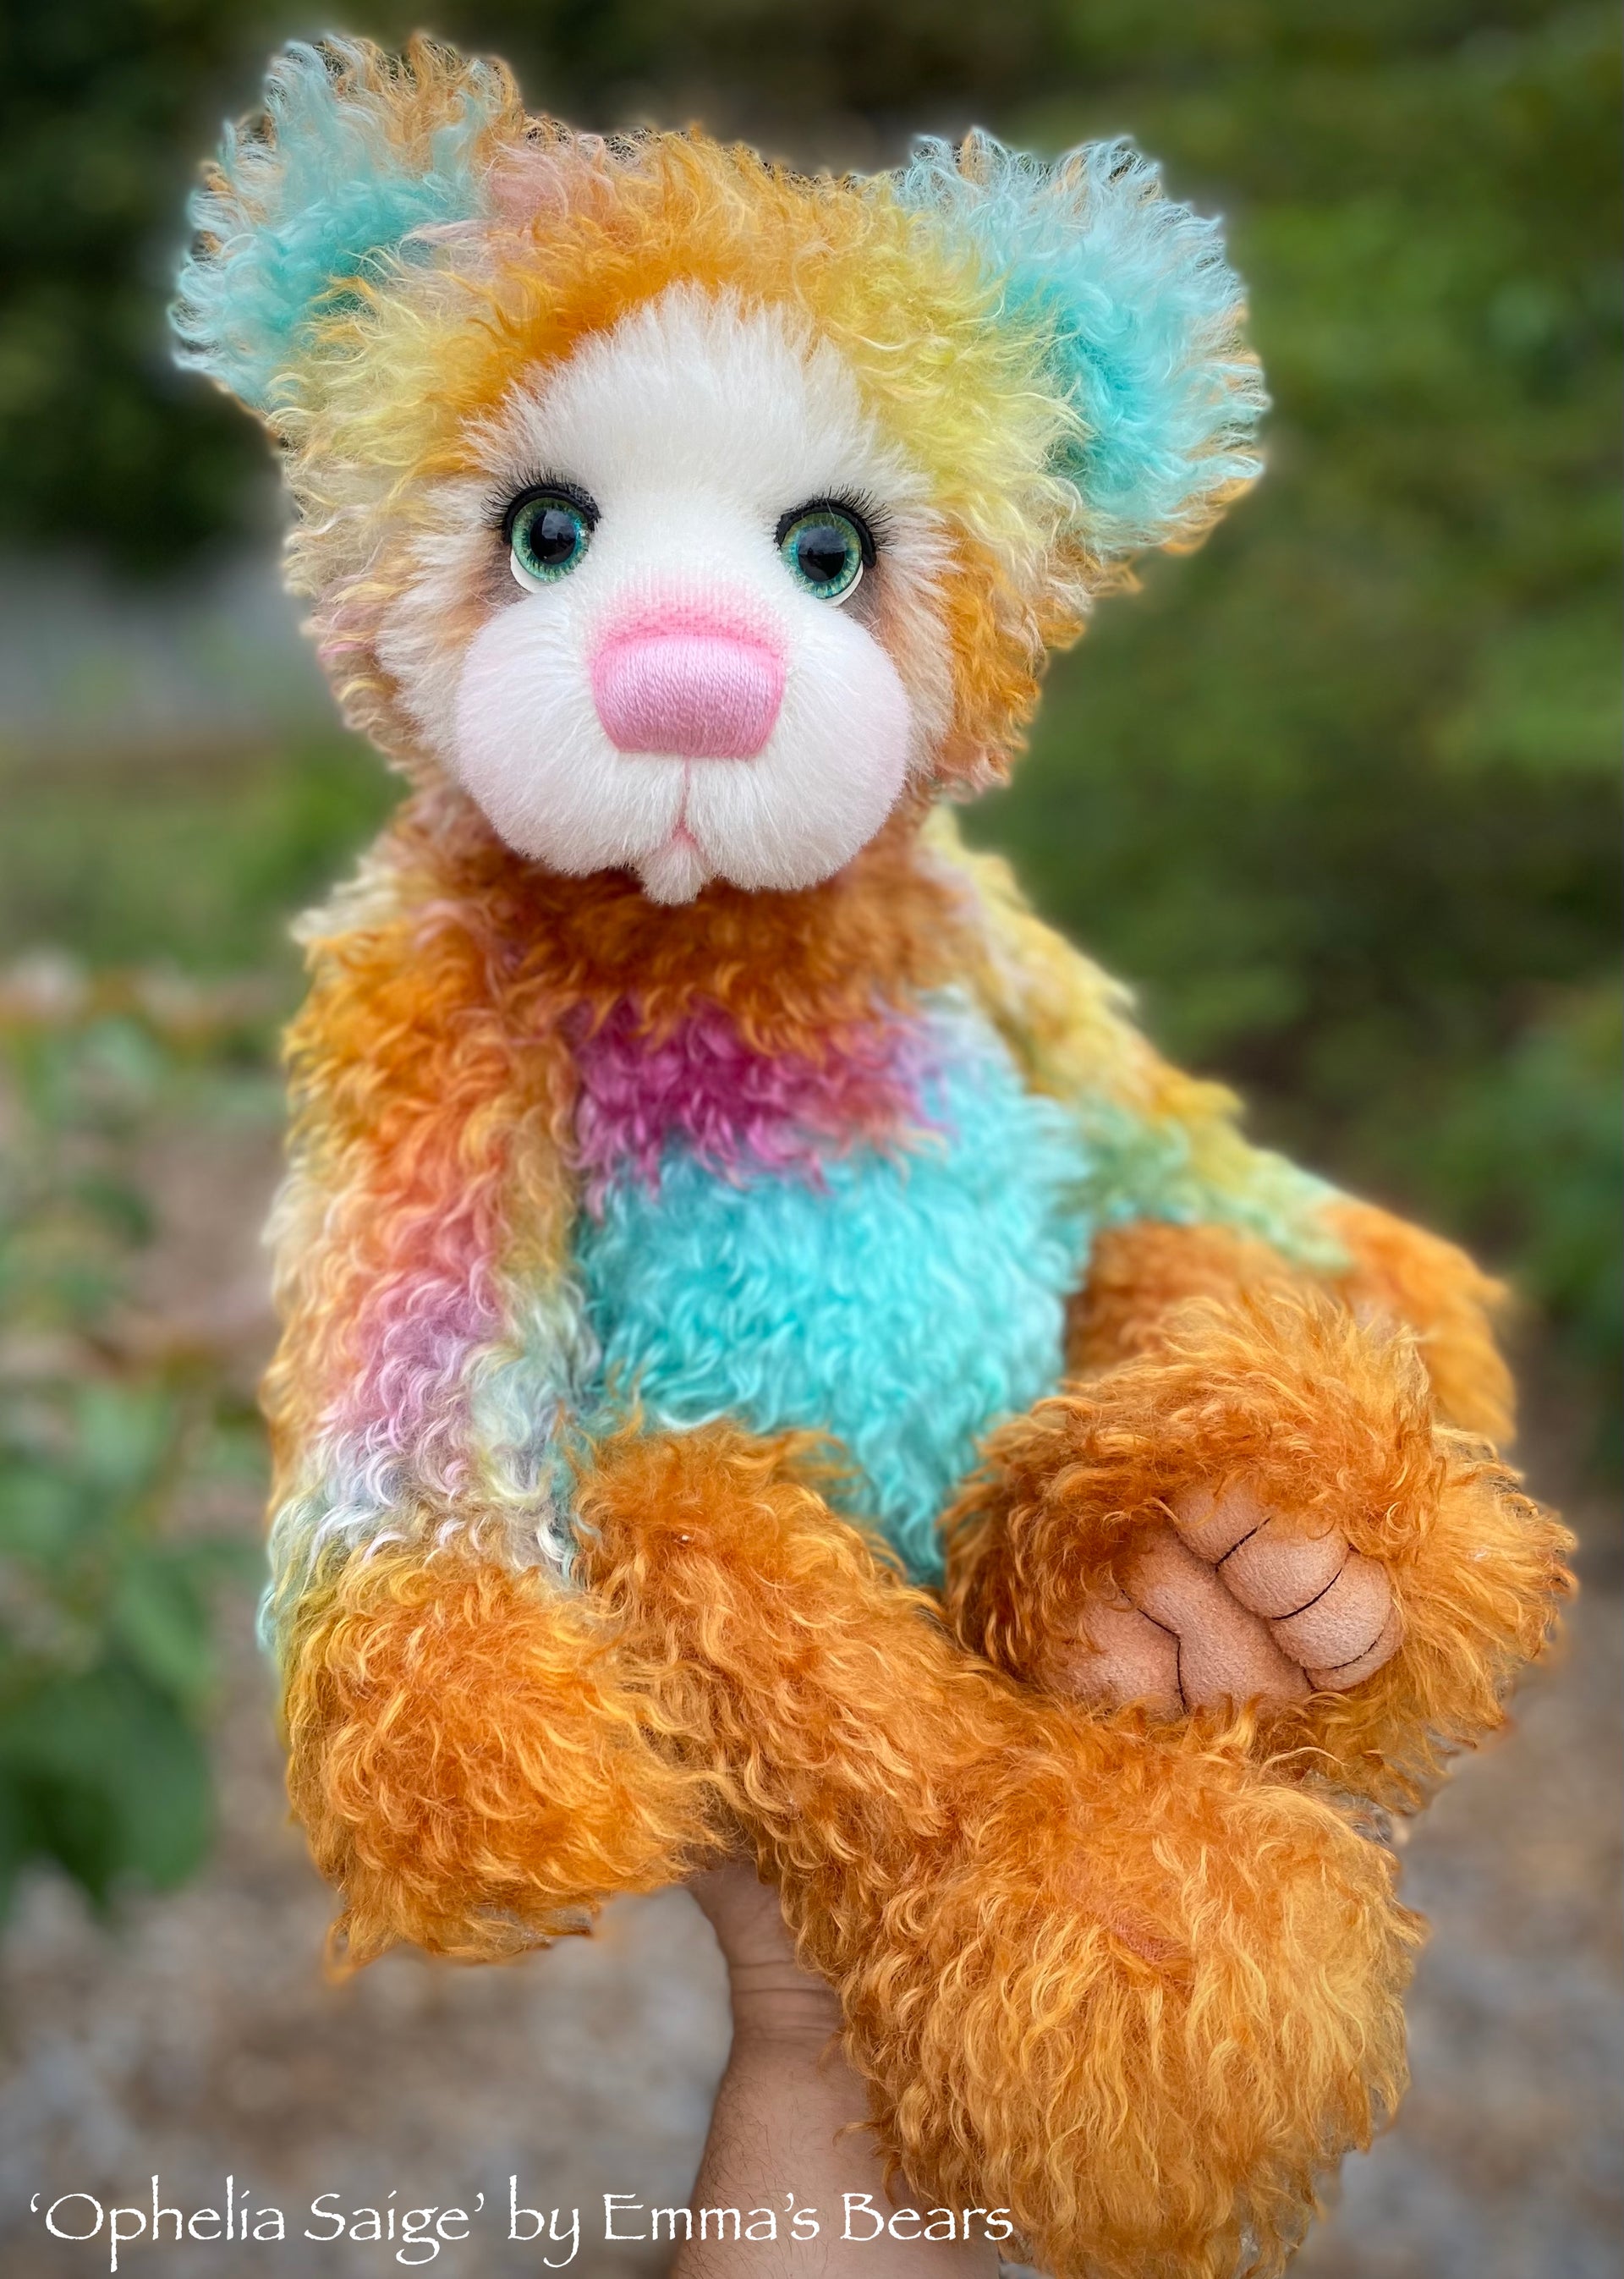 Ophelia Saige - 21" Mohair Toddler Artist Bear by Emma's Bears - OOAK